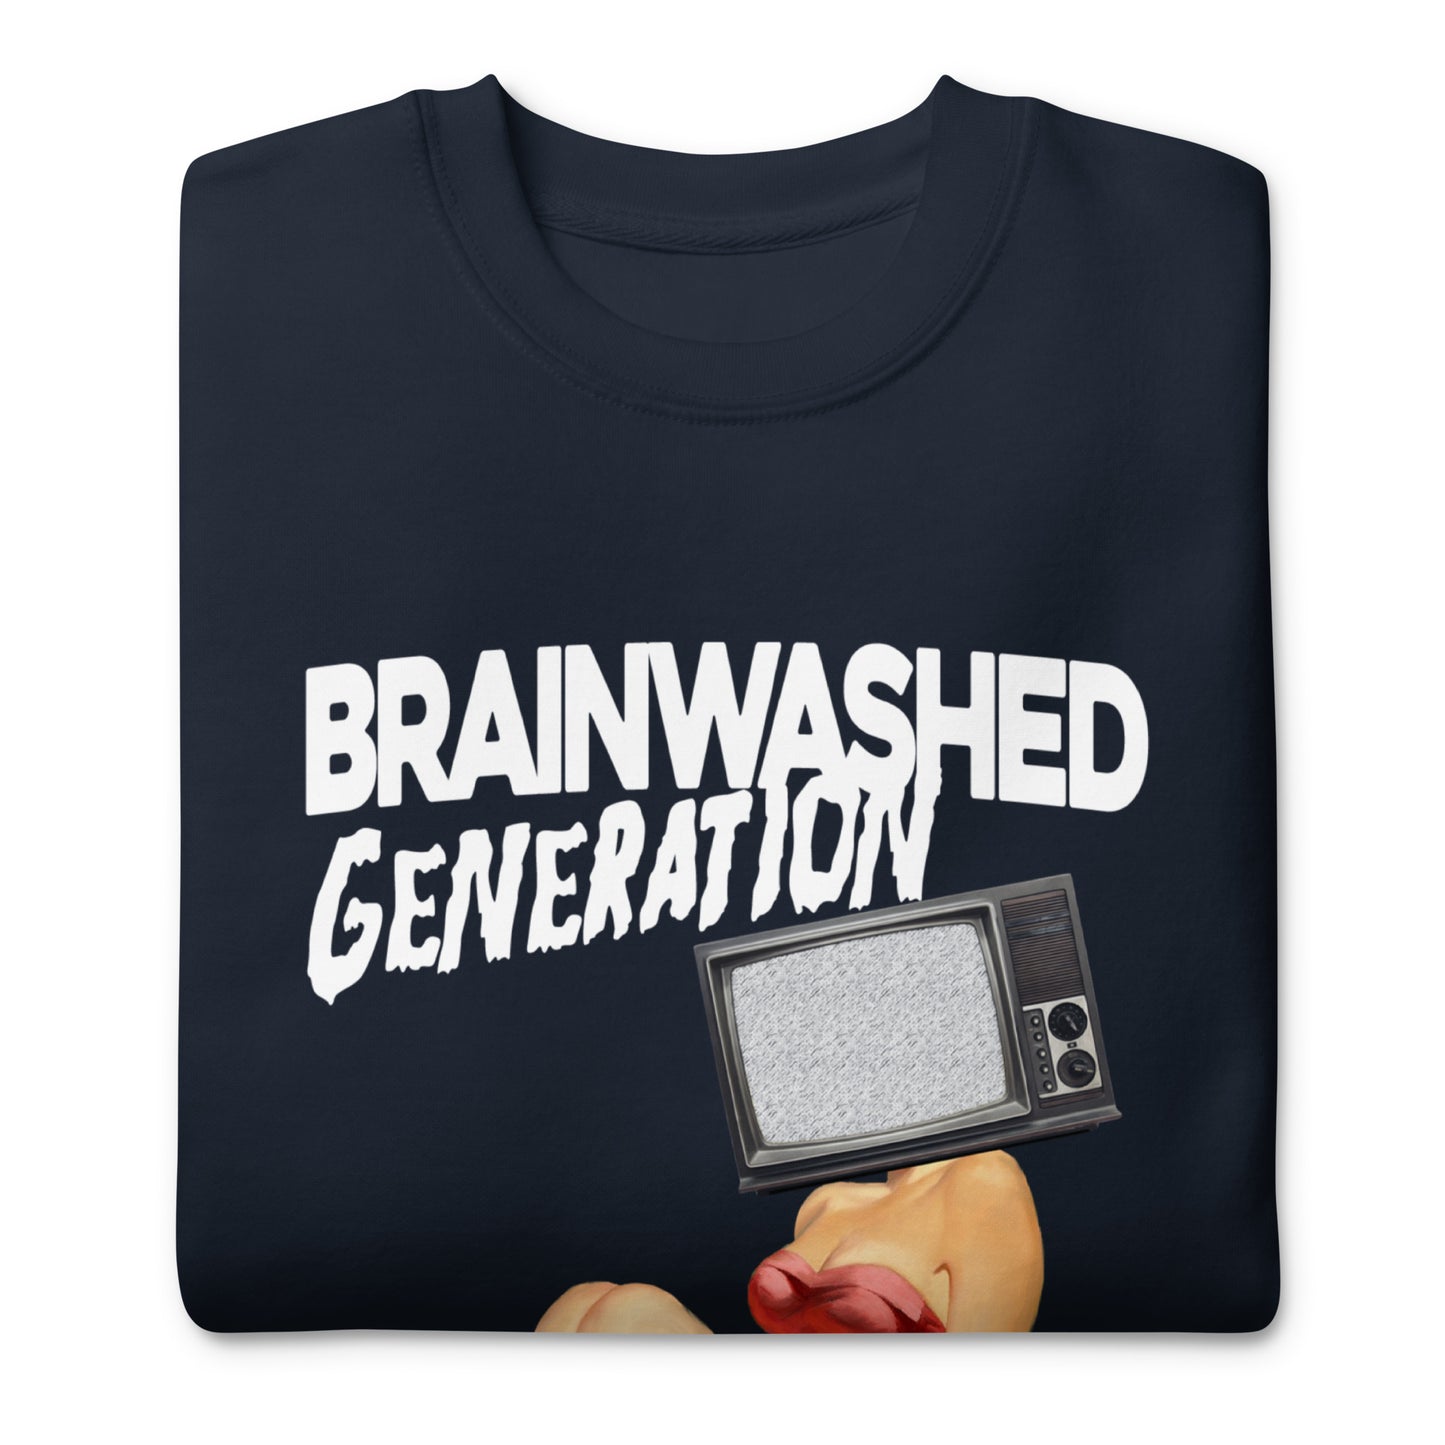 Brainwashed Generation KiSS Unisex Premium Sweatshirt - Retro Pin Up - Technology